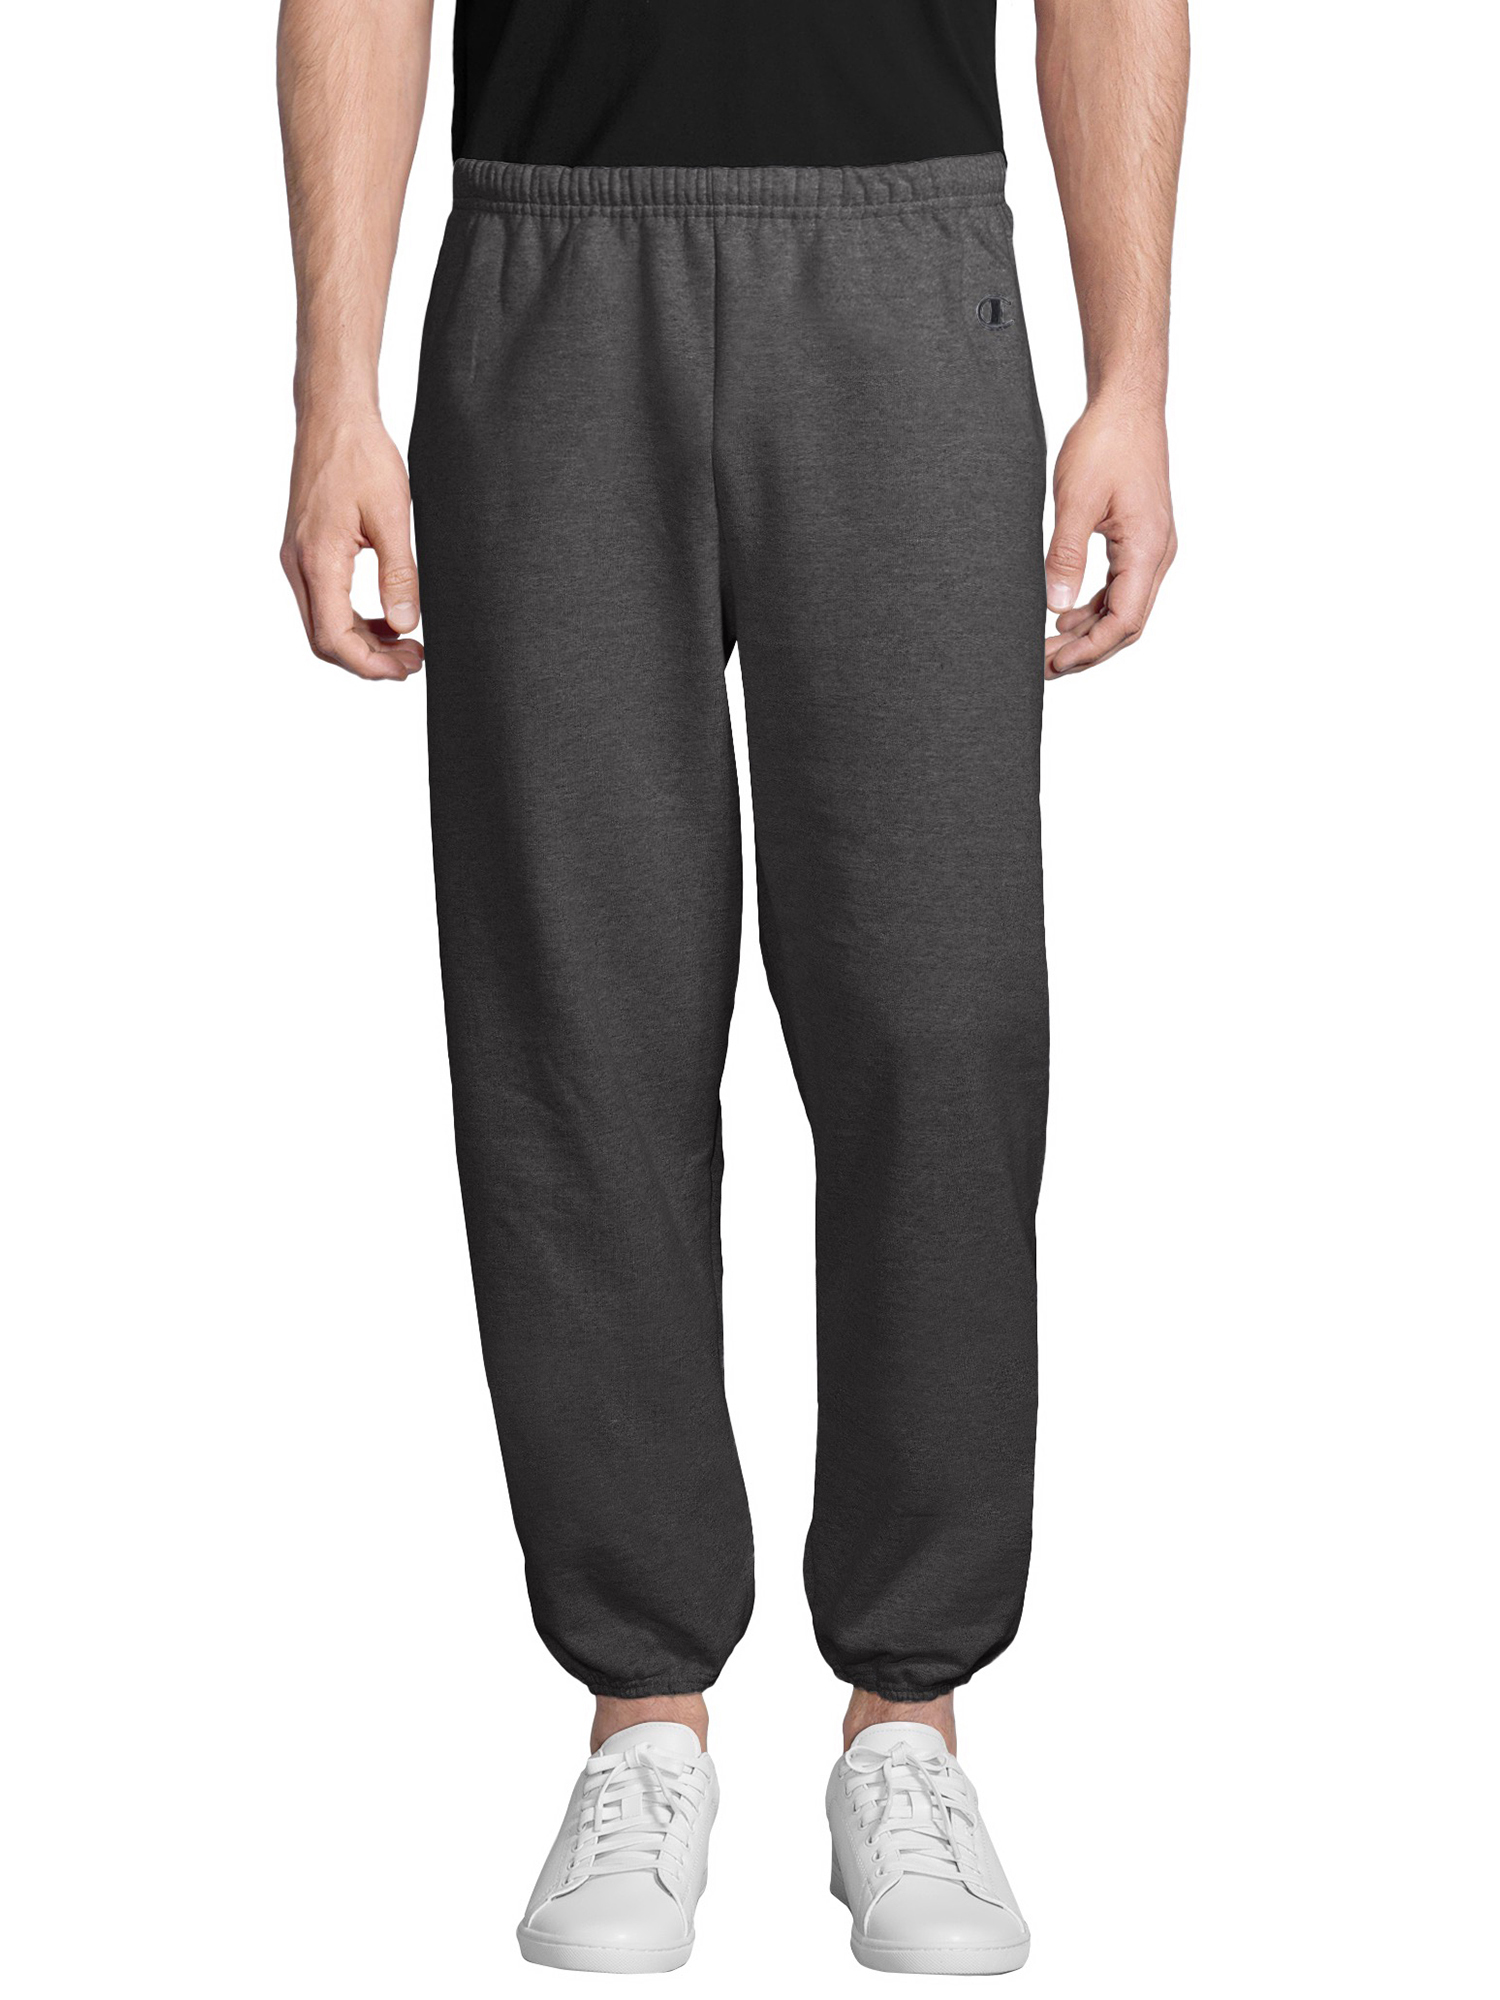 Champion Men's Cotton Max Fleece Sweatpants with Pockets - Walmart.com